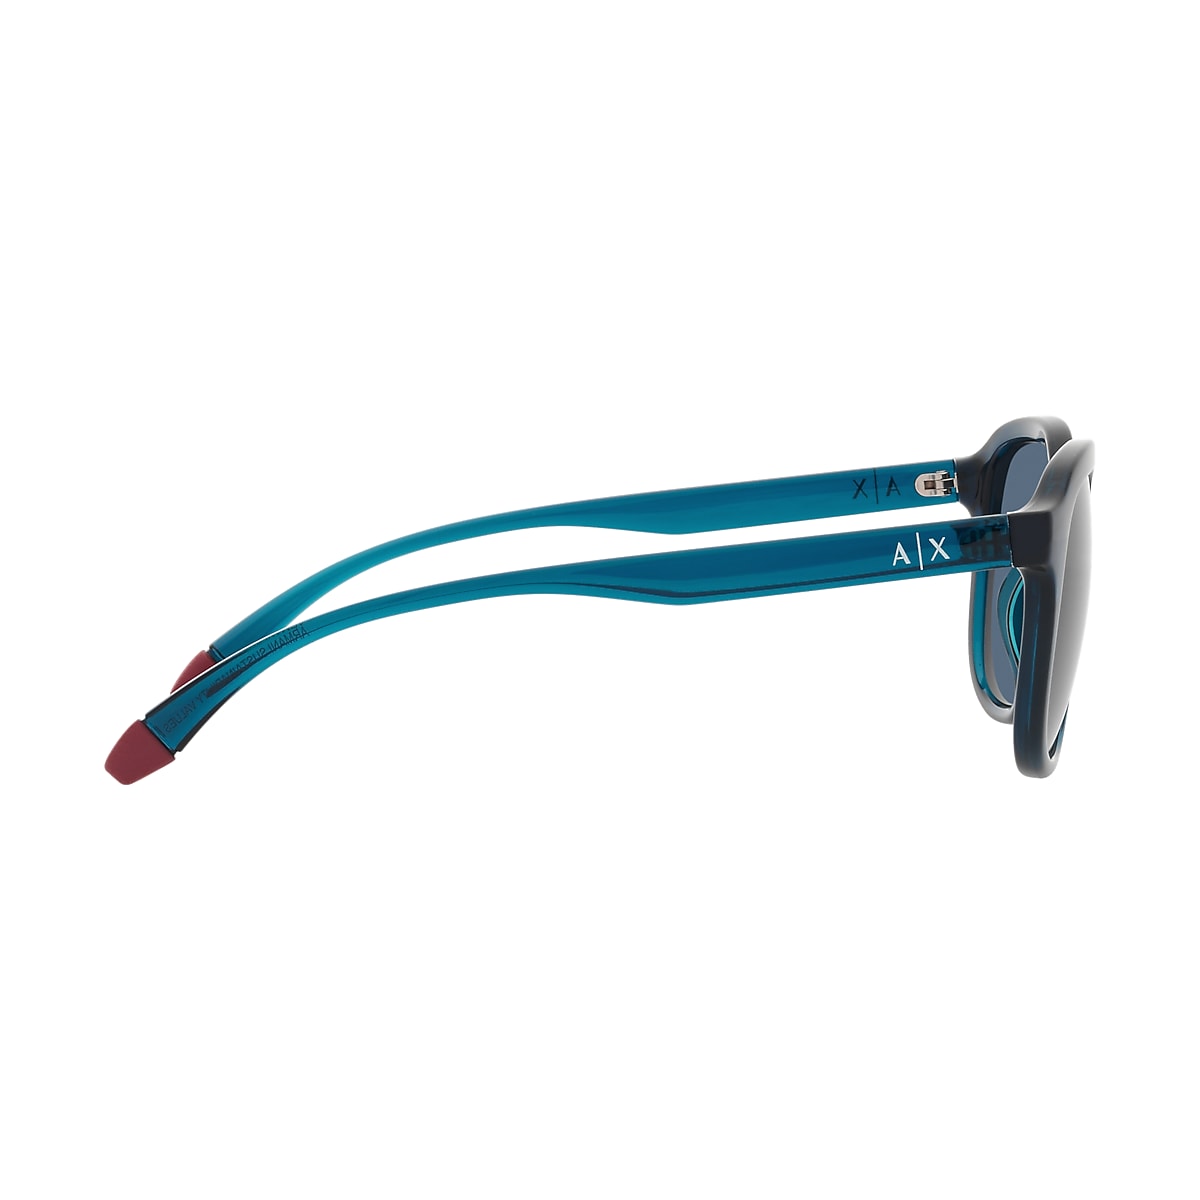 Armani Exchange Shiny Transparent Blue Sunglasses | Glasses.com 